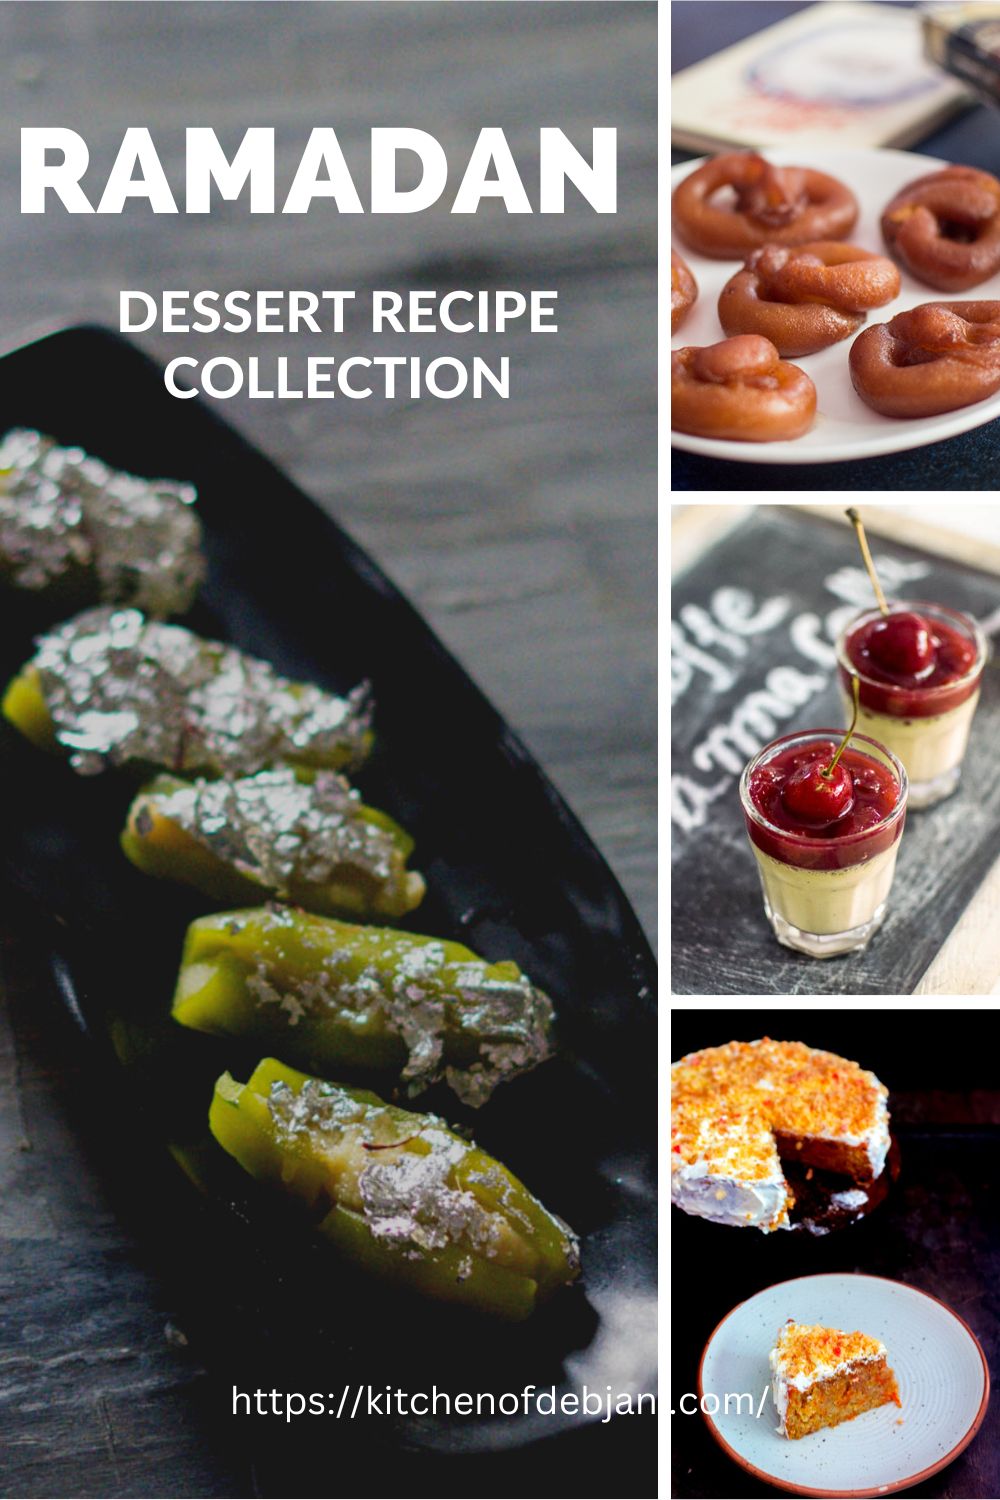 %Ramadan Dessert Recipe collection Pinterest Graphic